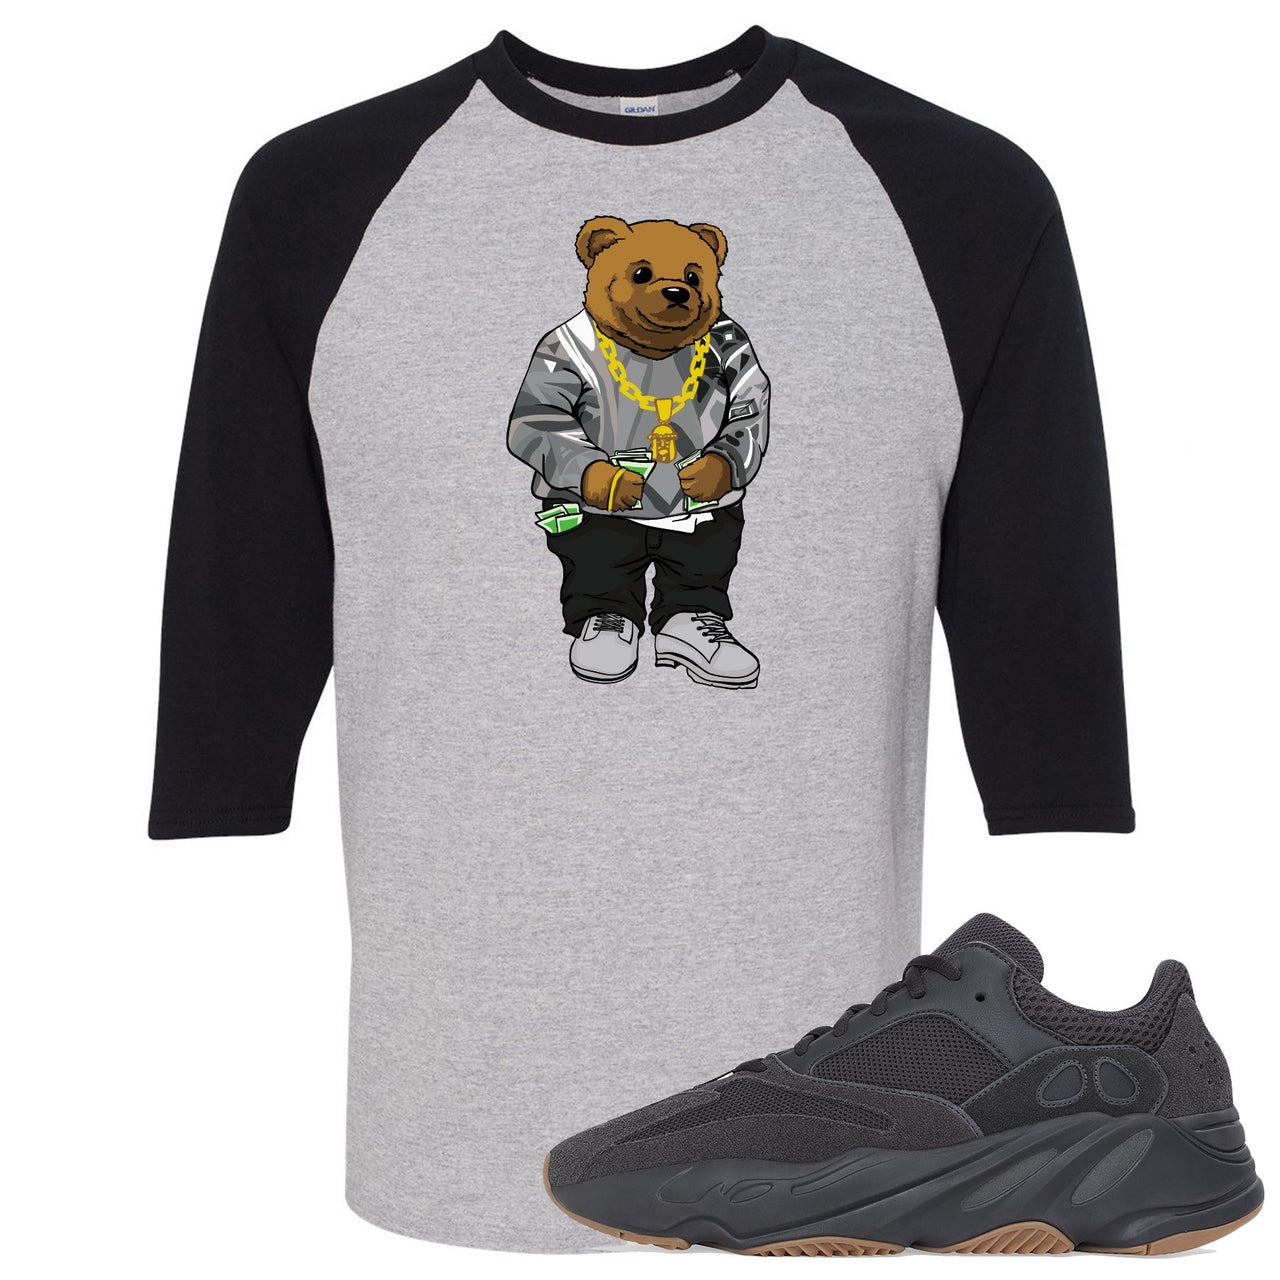 Yeezy Boost 700 Utility Black Sneaker Hook Up Sweater Bear Sports Grey and Black Raglan T-Shirt